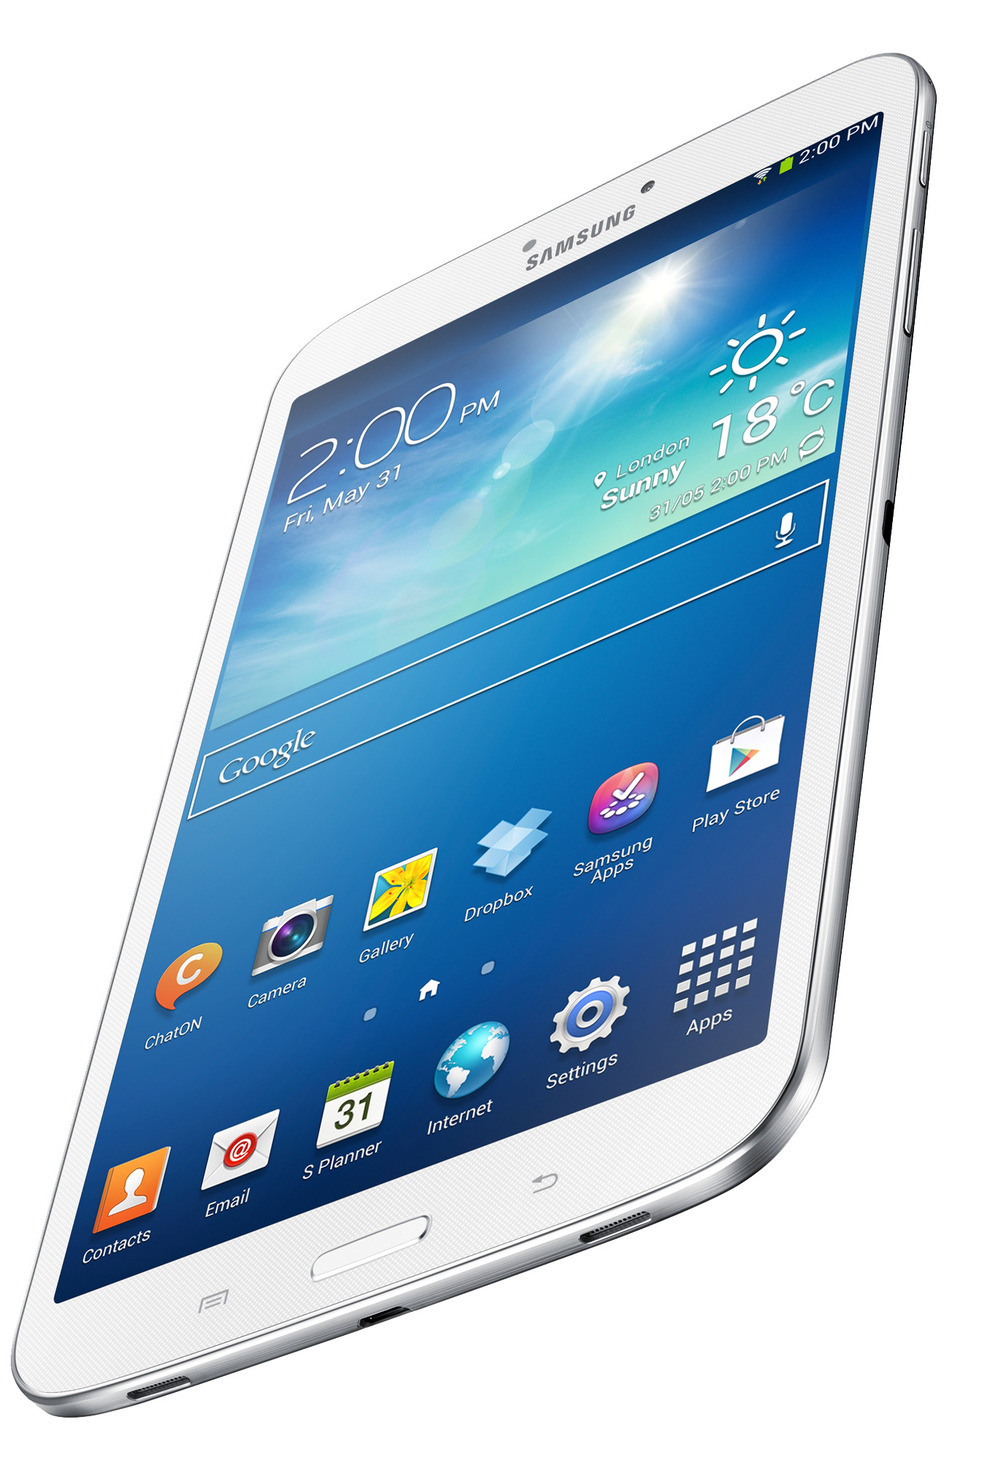 Samsung Galaxy Tab 8.0 SM t311